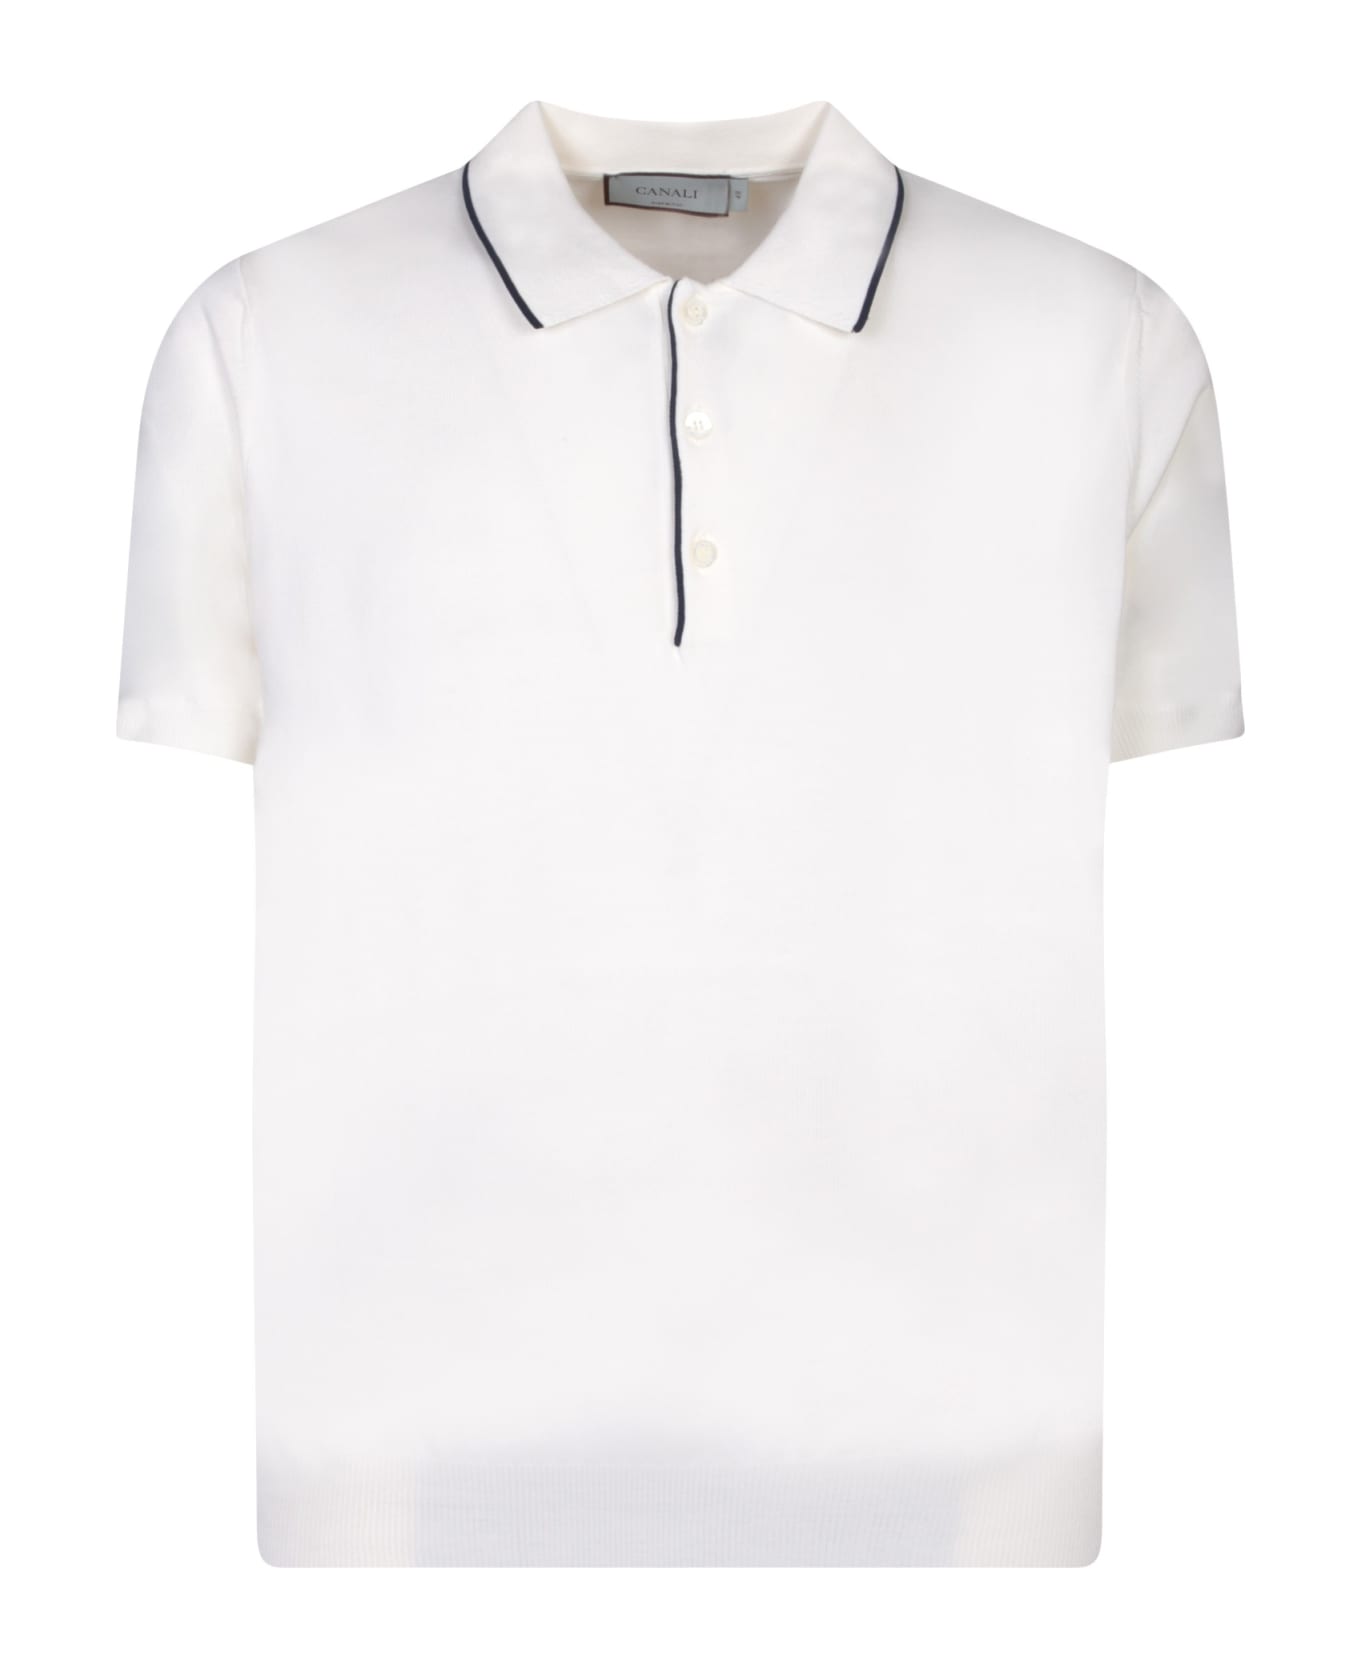 Canali Edges Blue/white Polo Shirt - White ポロシャツ